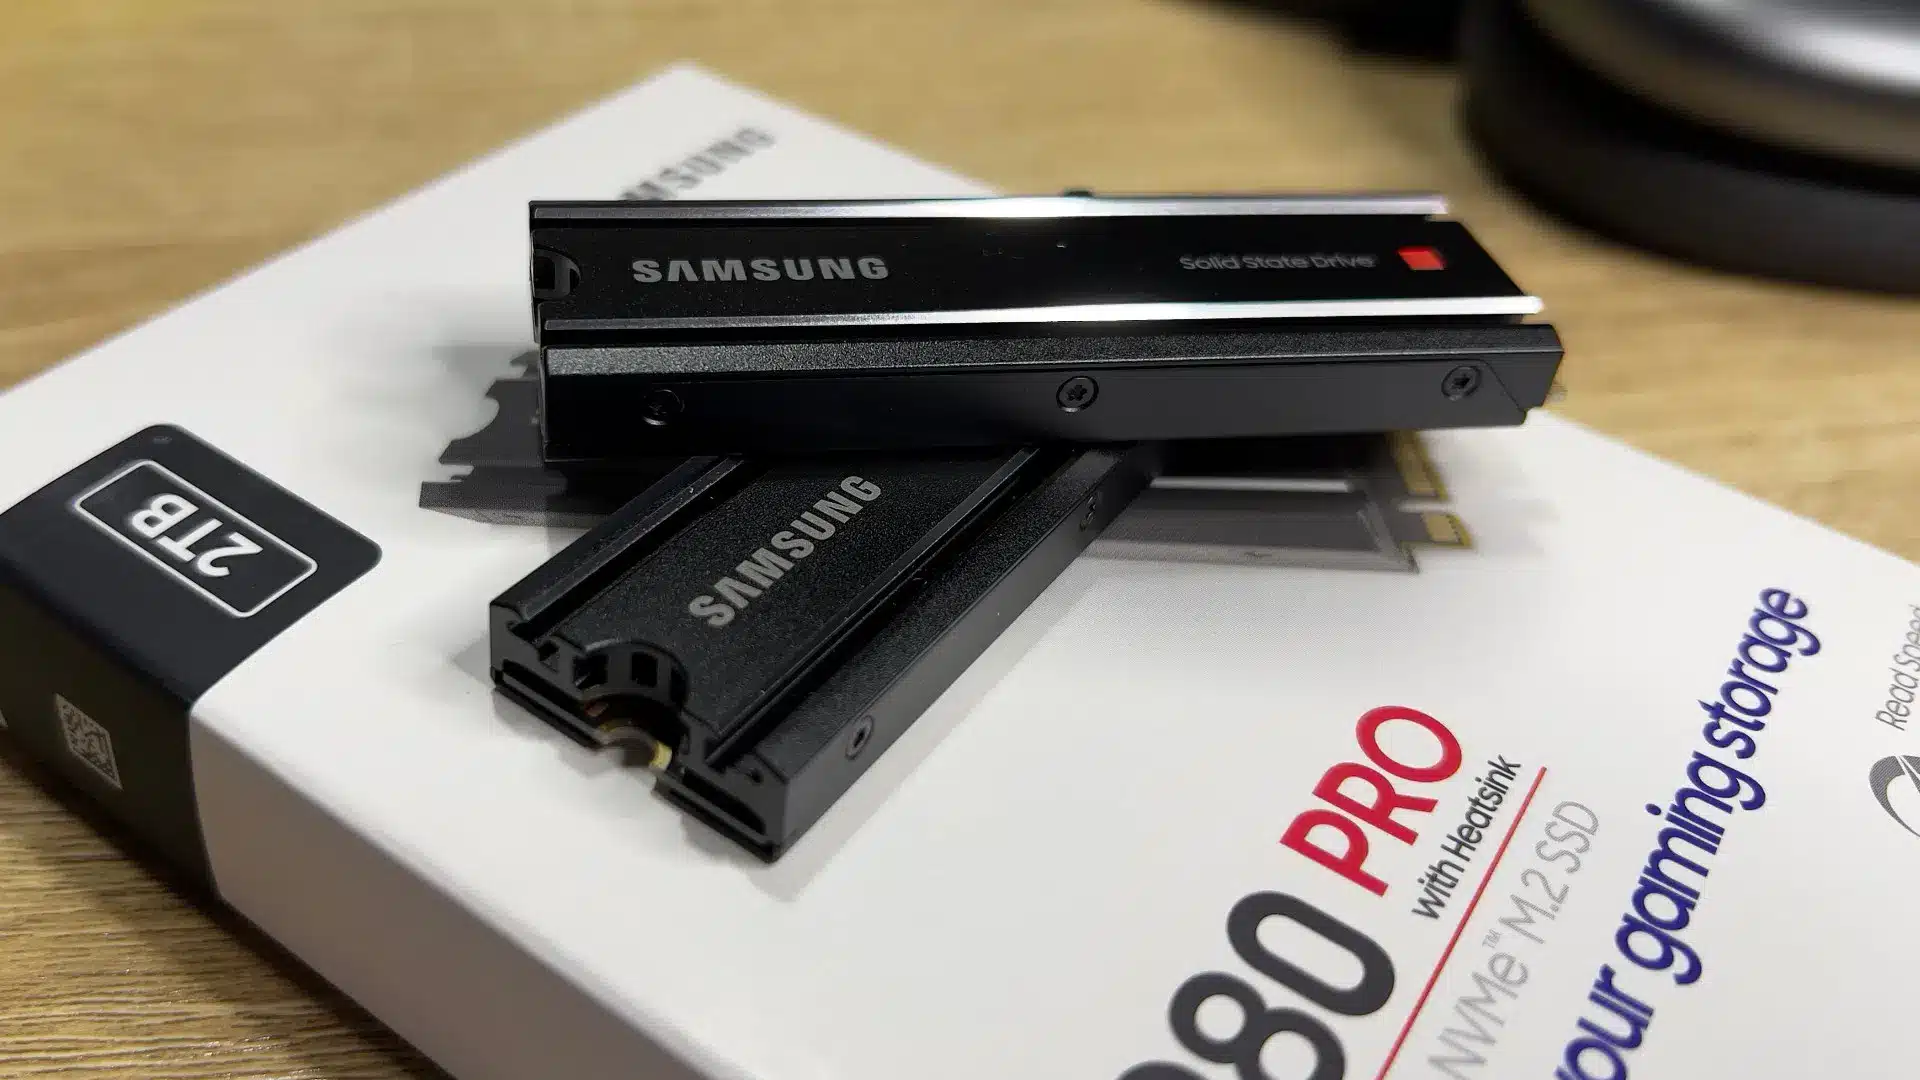 Samsung 980 Pro SSD With Heatsink Vs Custom Heatsink Model Tested on PS5